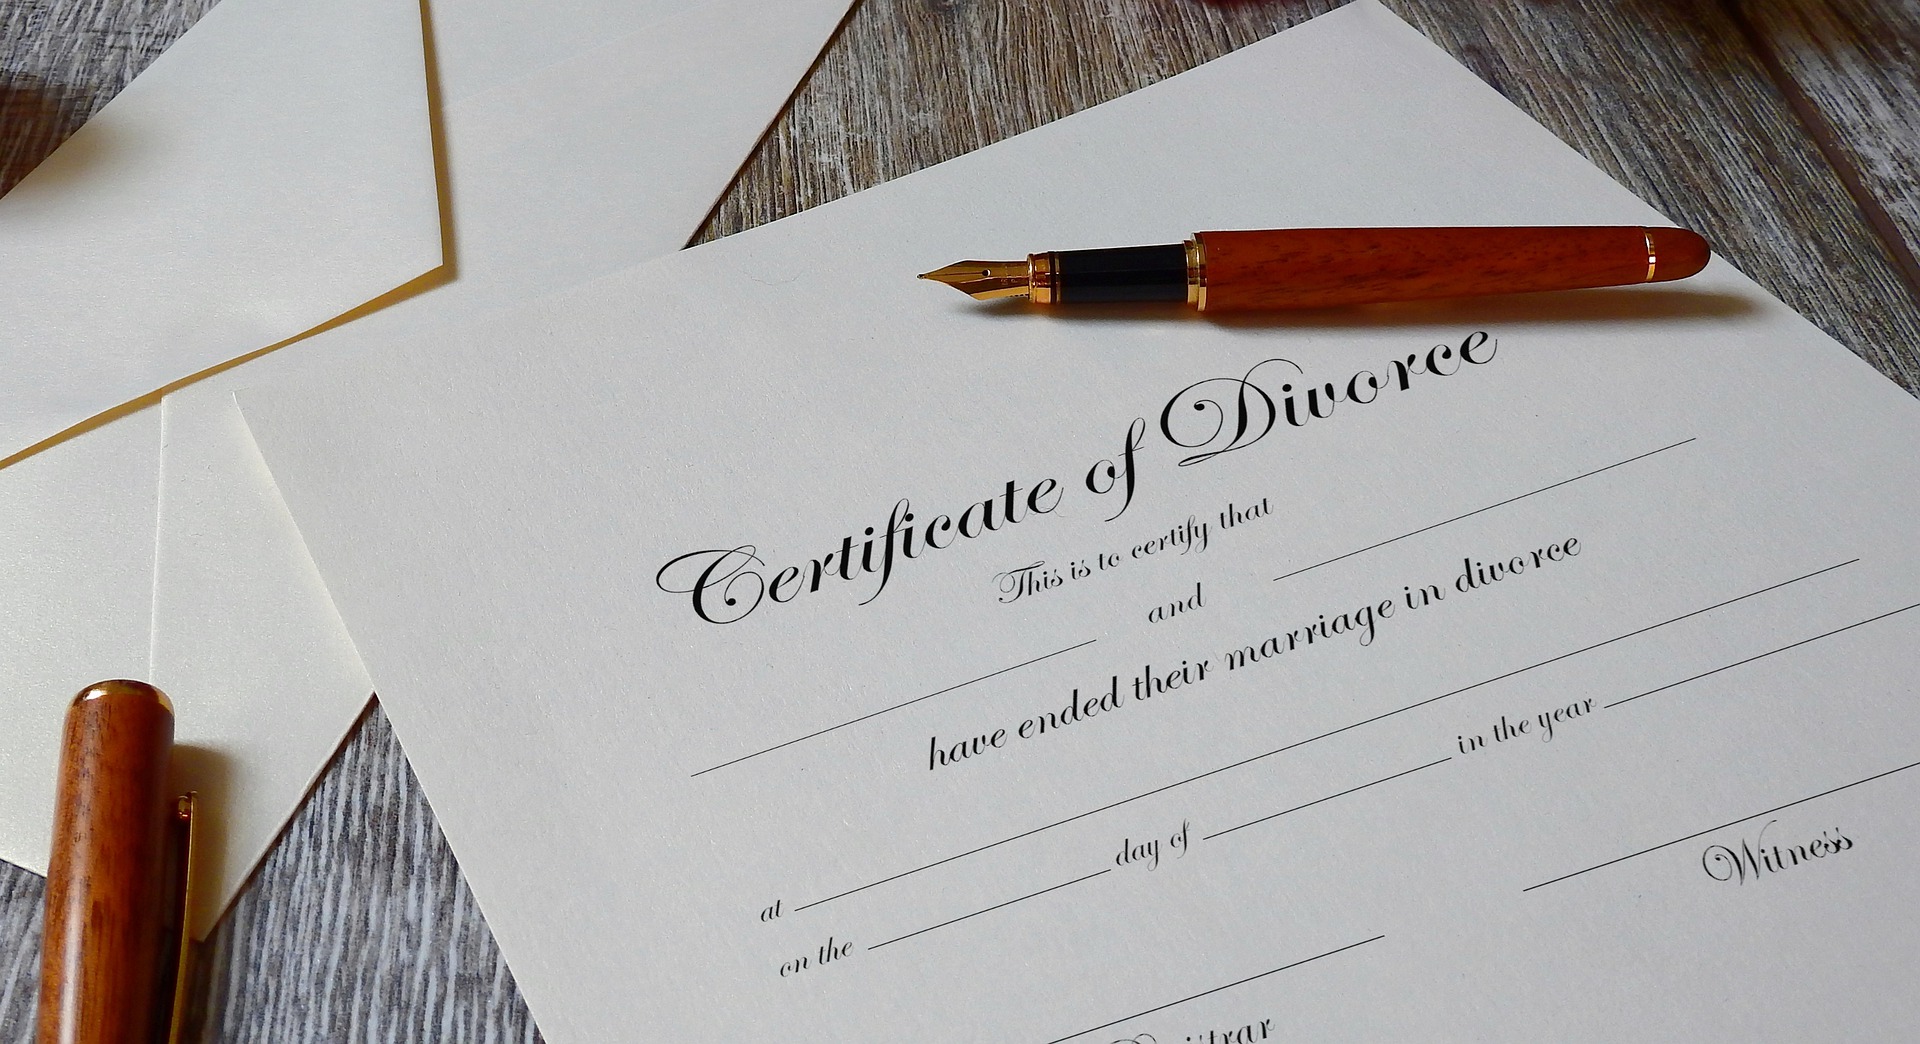 Divorce certificate - Image by Tumisu, via Pixabay.com.